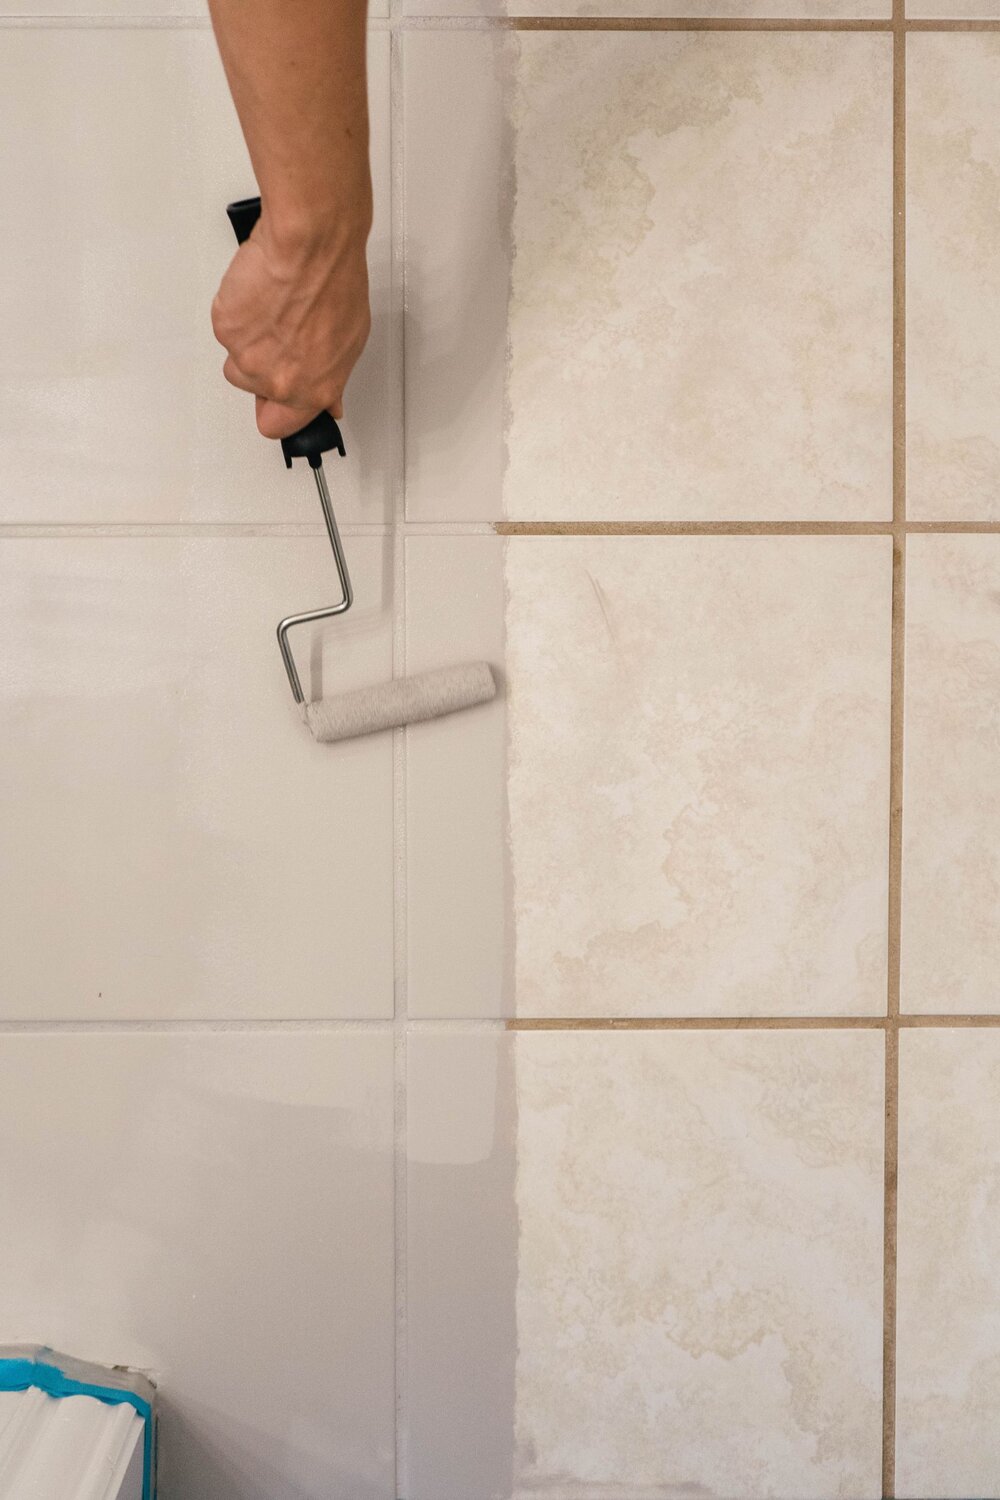 Diy How To Paint Ceramic Floor Tile, Can You Paint Tile Floors